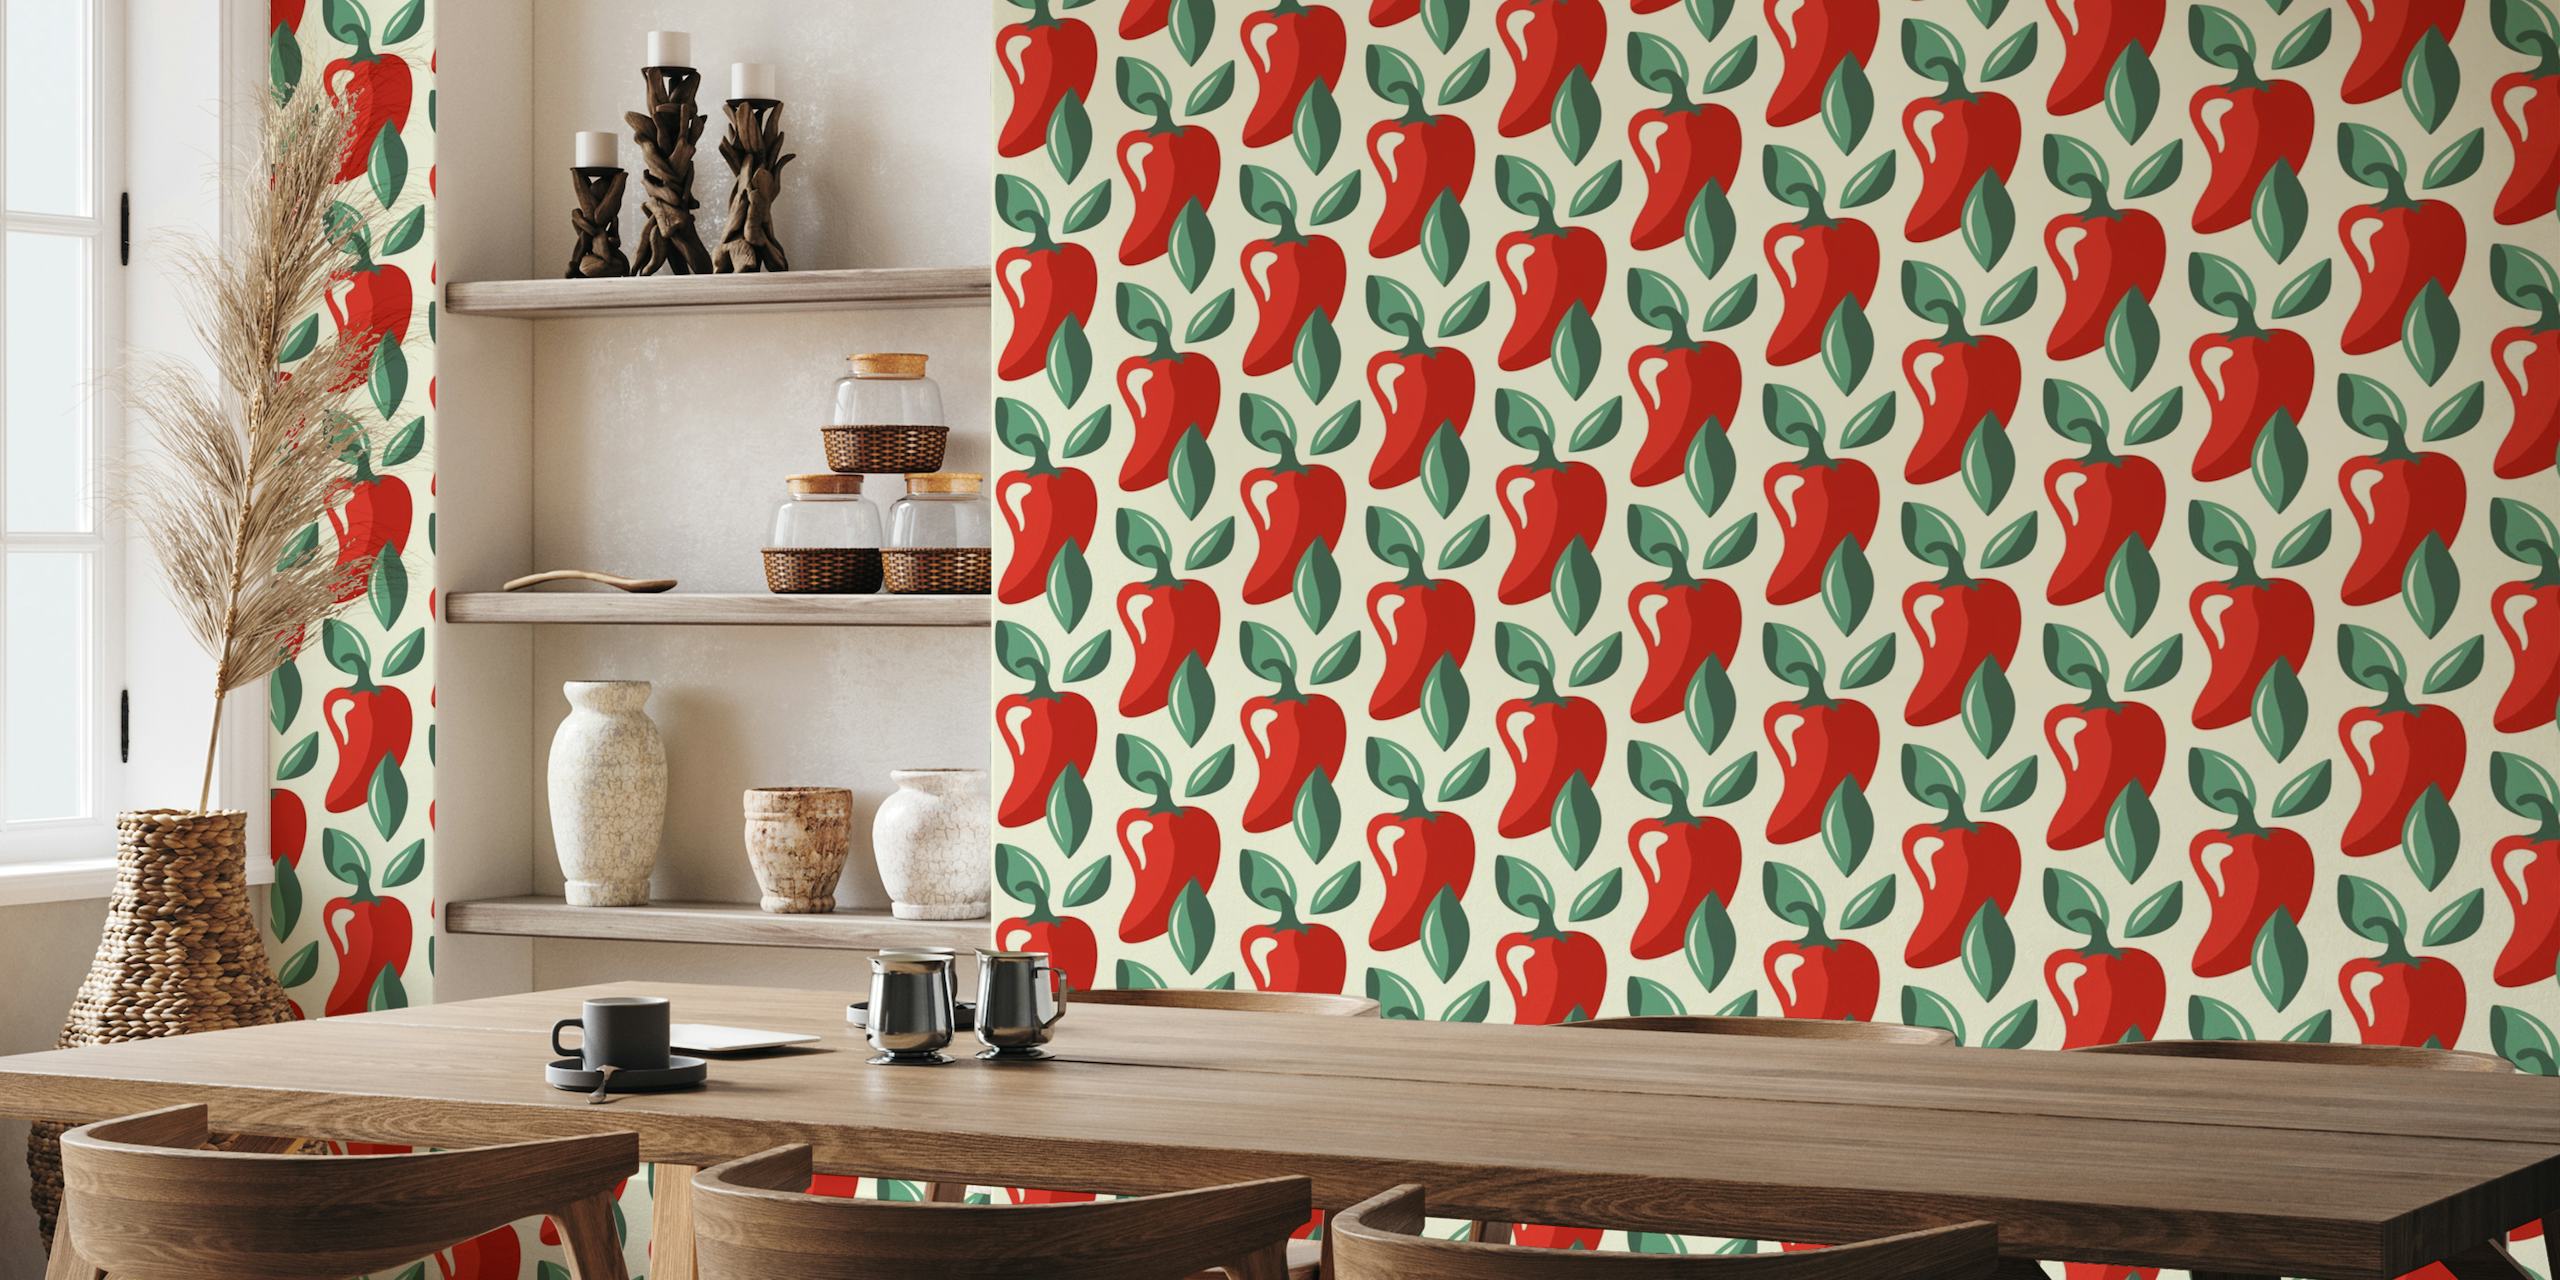 Red chilli peper / paprika / 3122A wallpaper